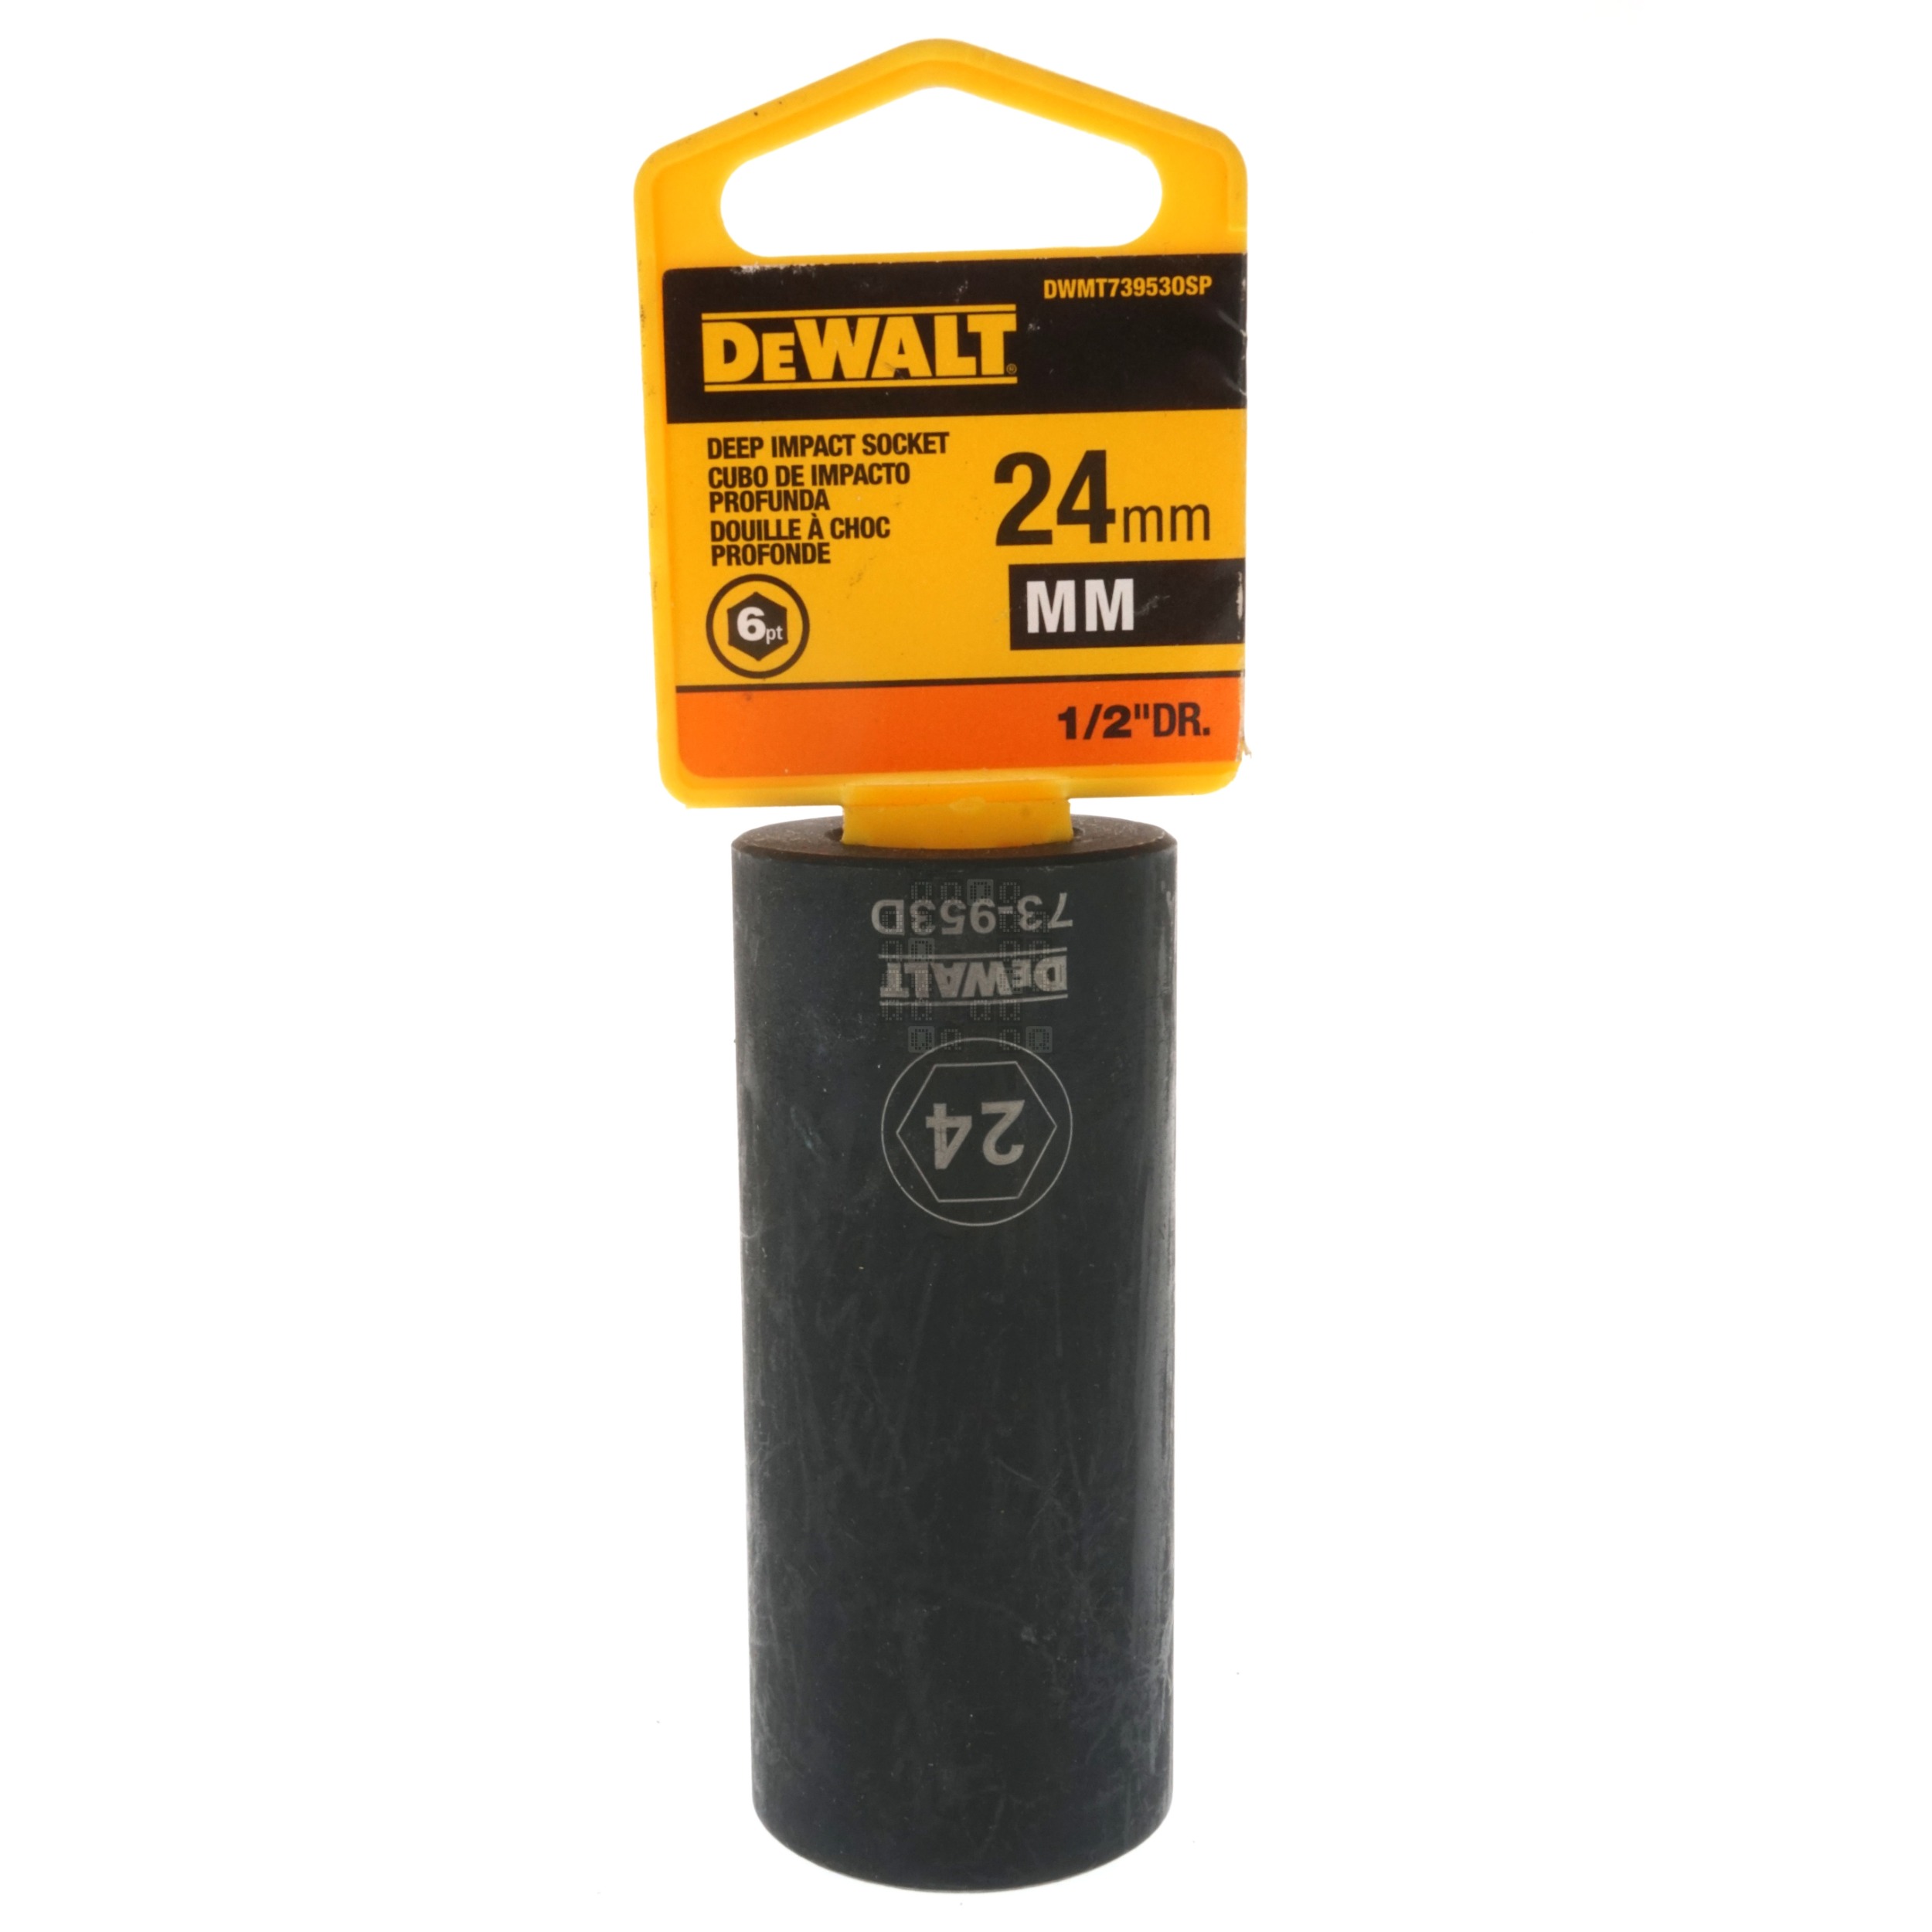 DeWALT DWMT73953OSP 24mm Black Deep Impact Socket, 1/2" Drive, 73-953D, 6-Point